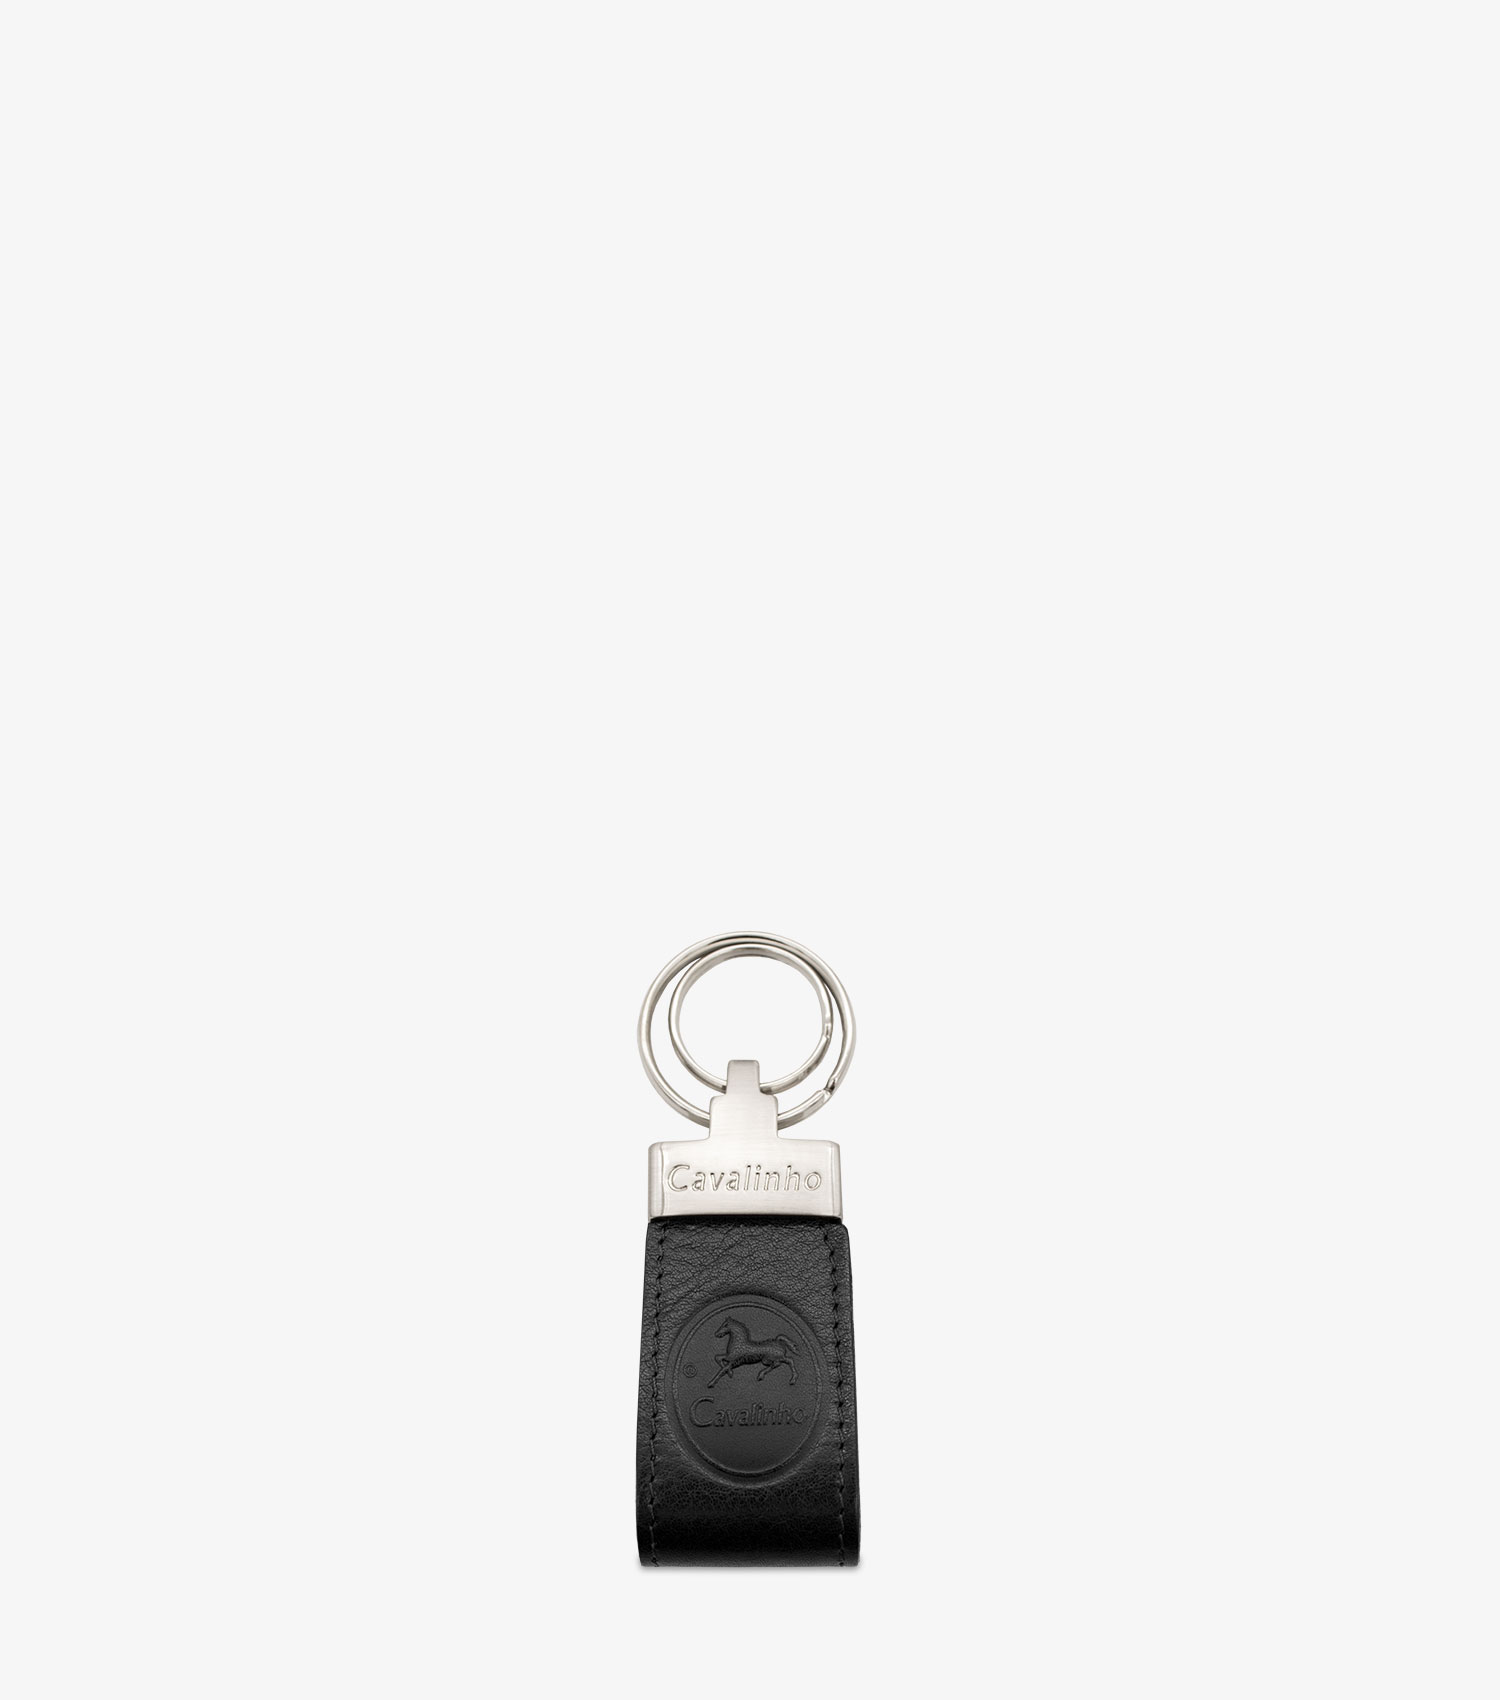 porta-chaves gentleman_1.jpg